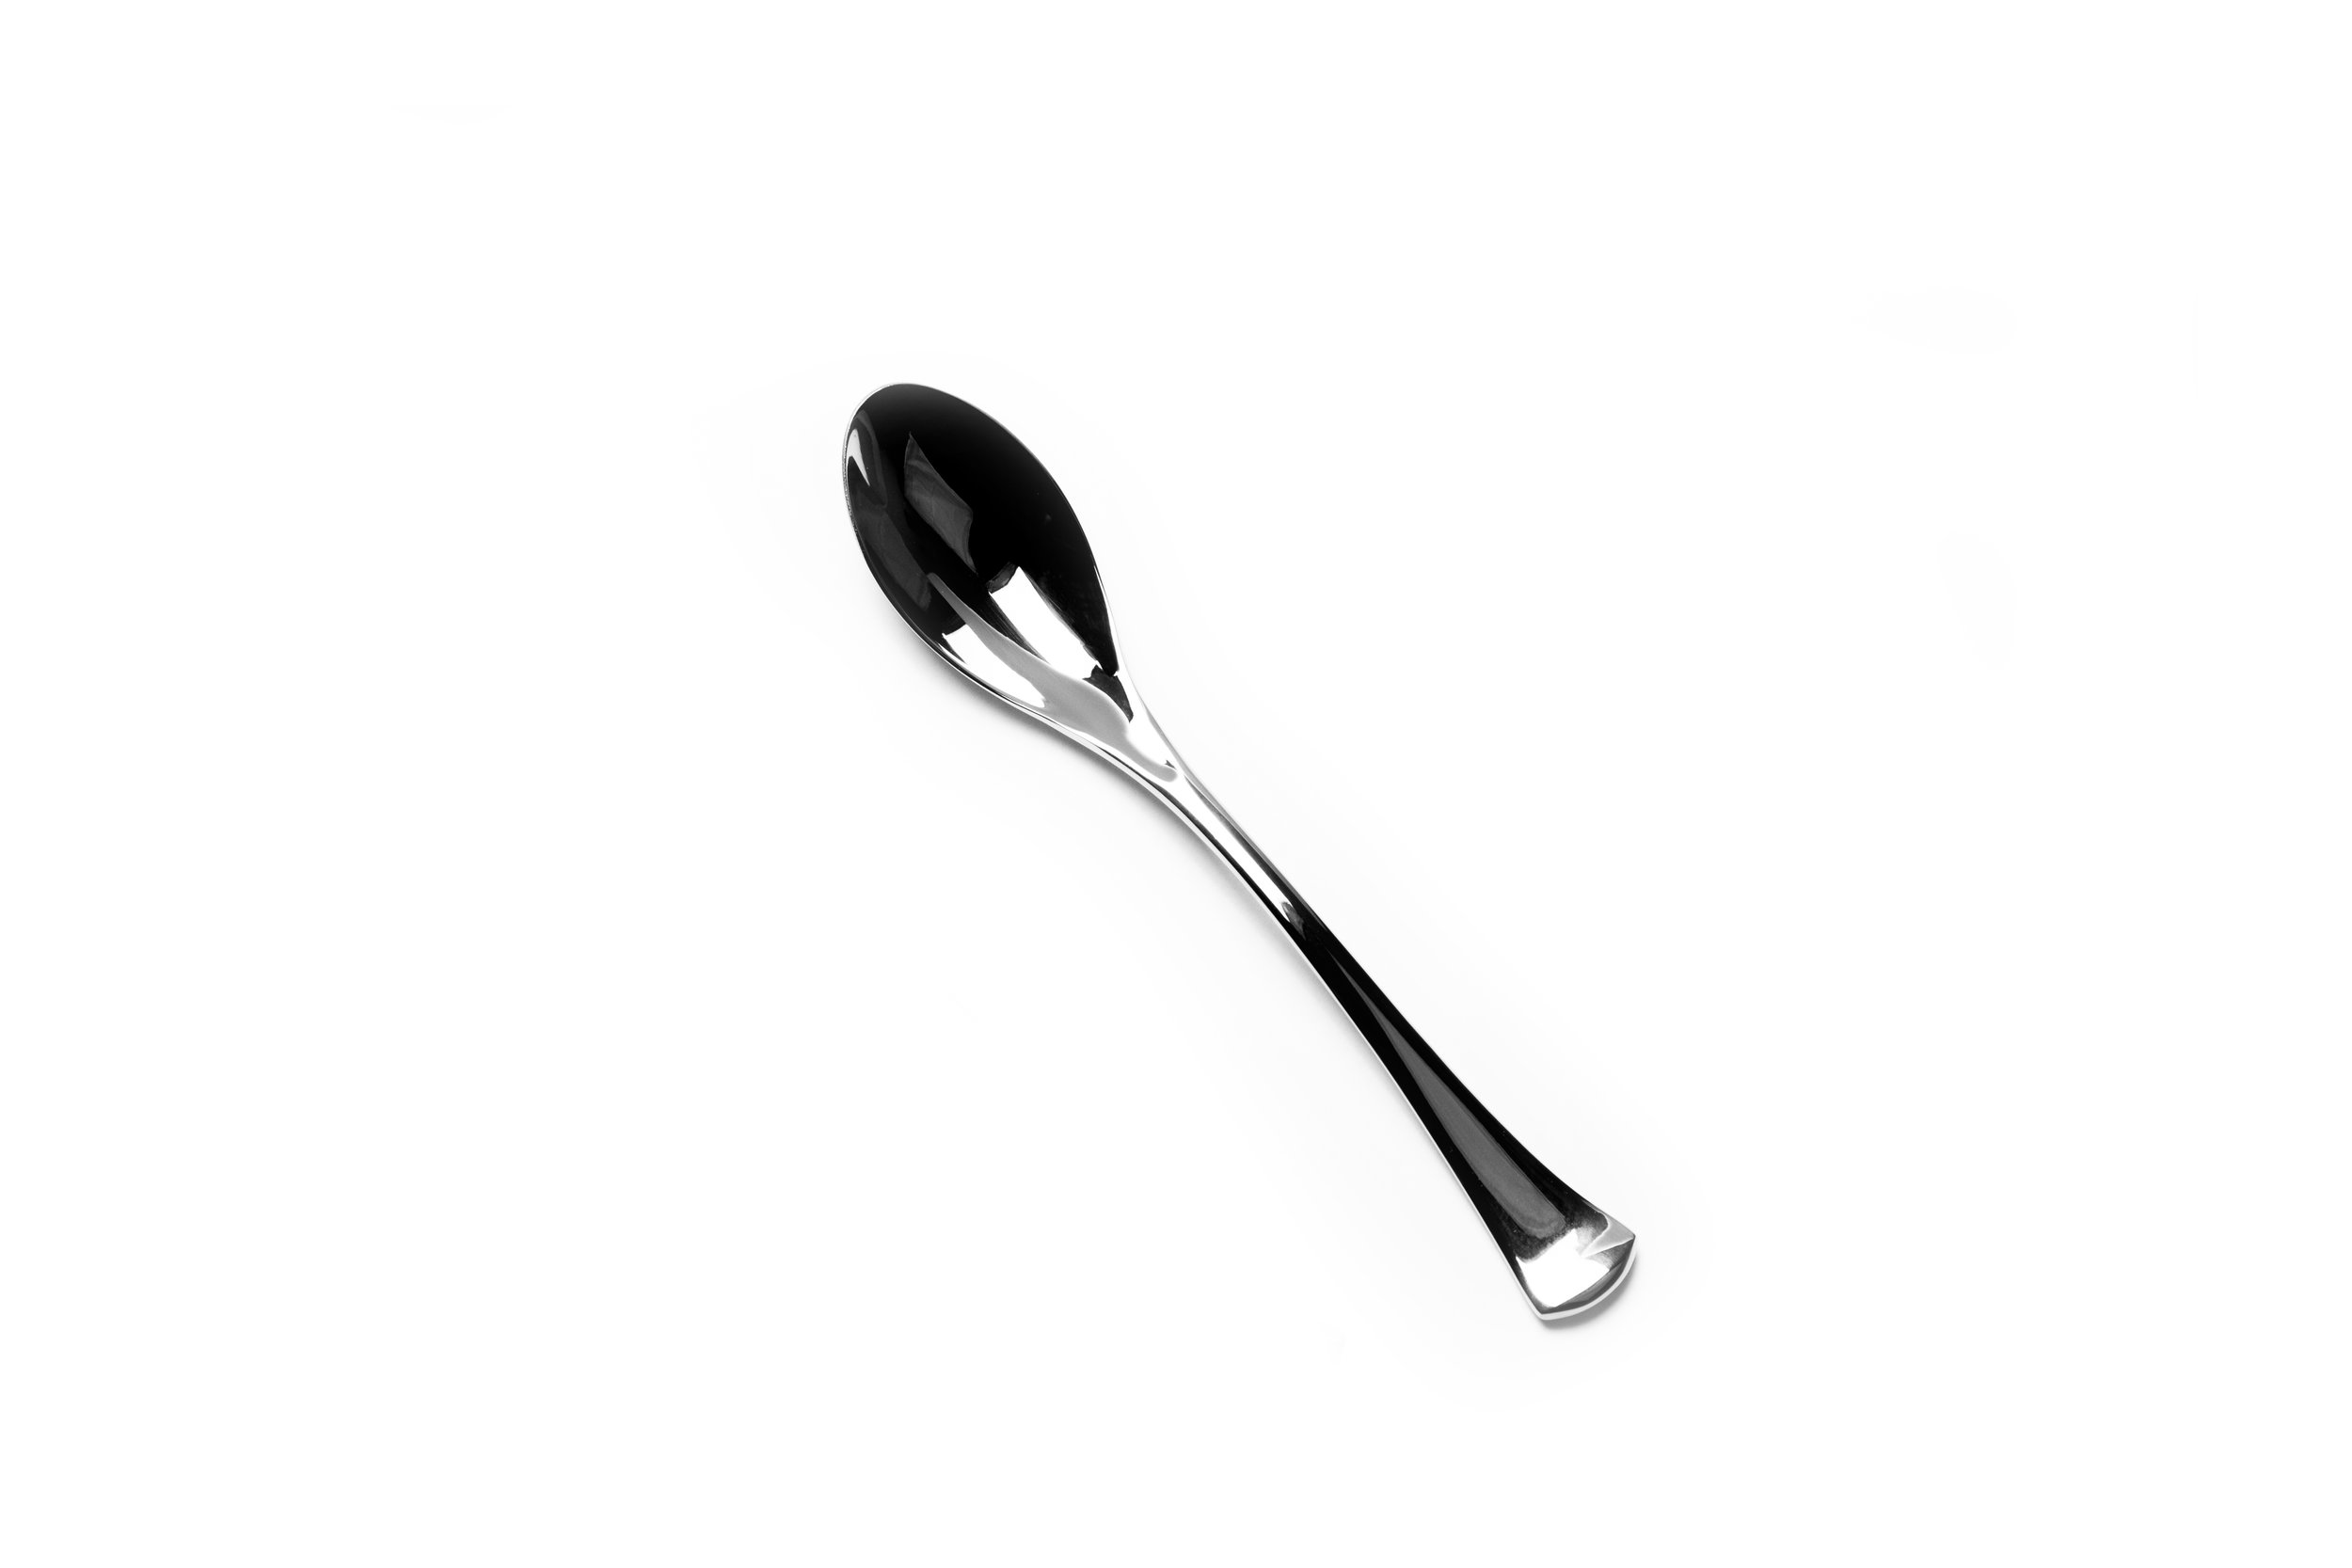 The Rocher Spoon